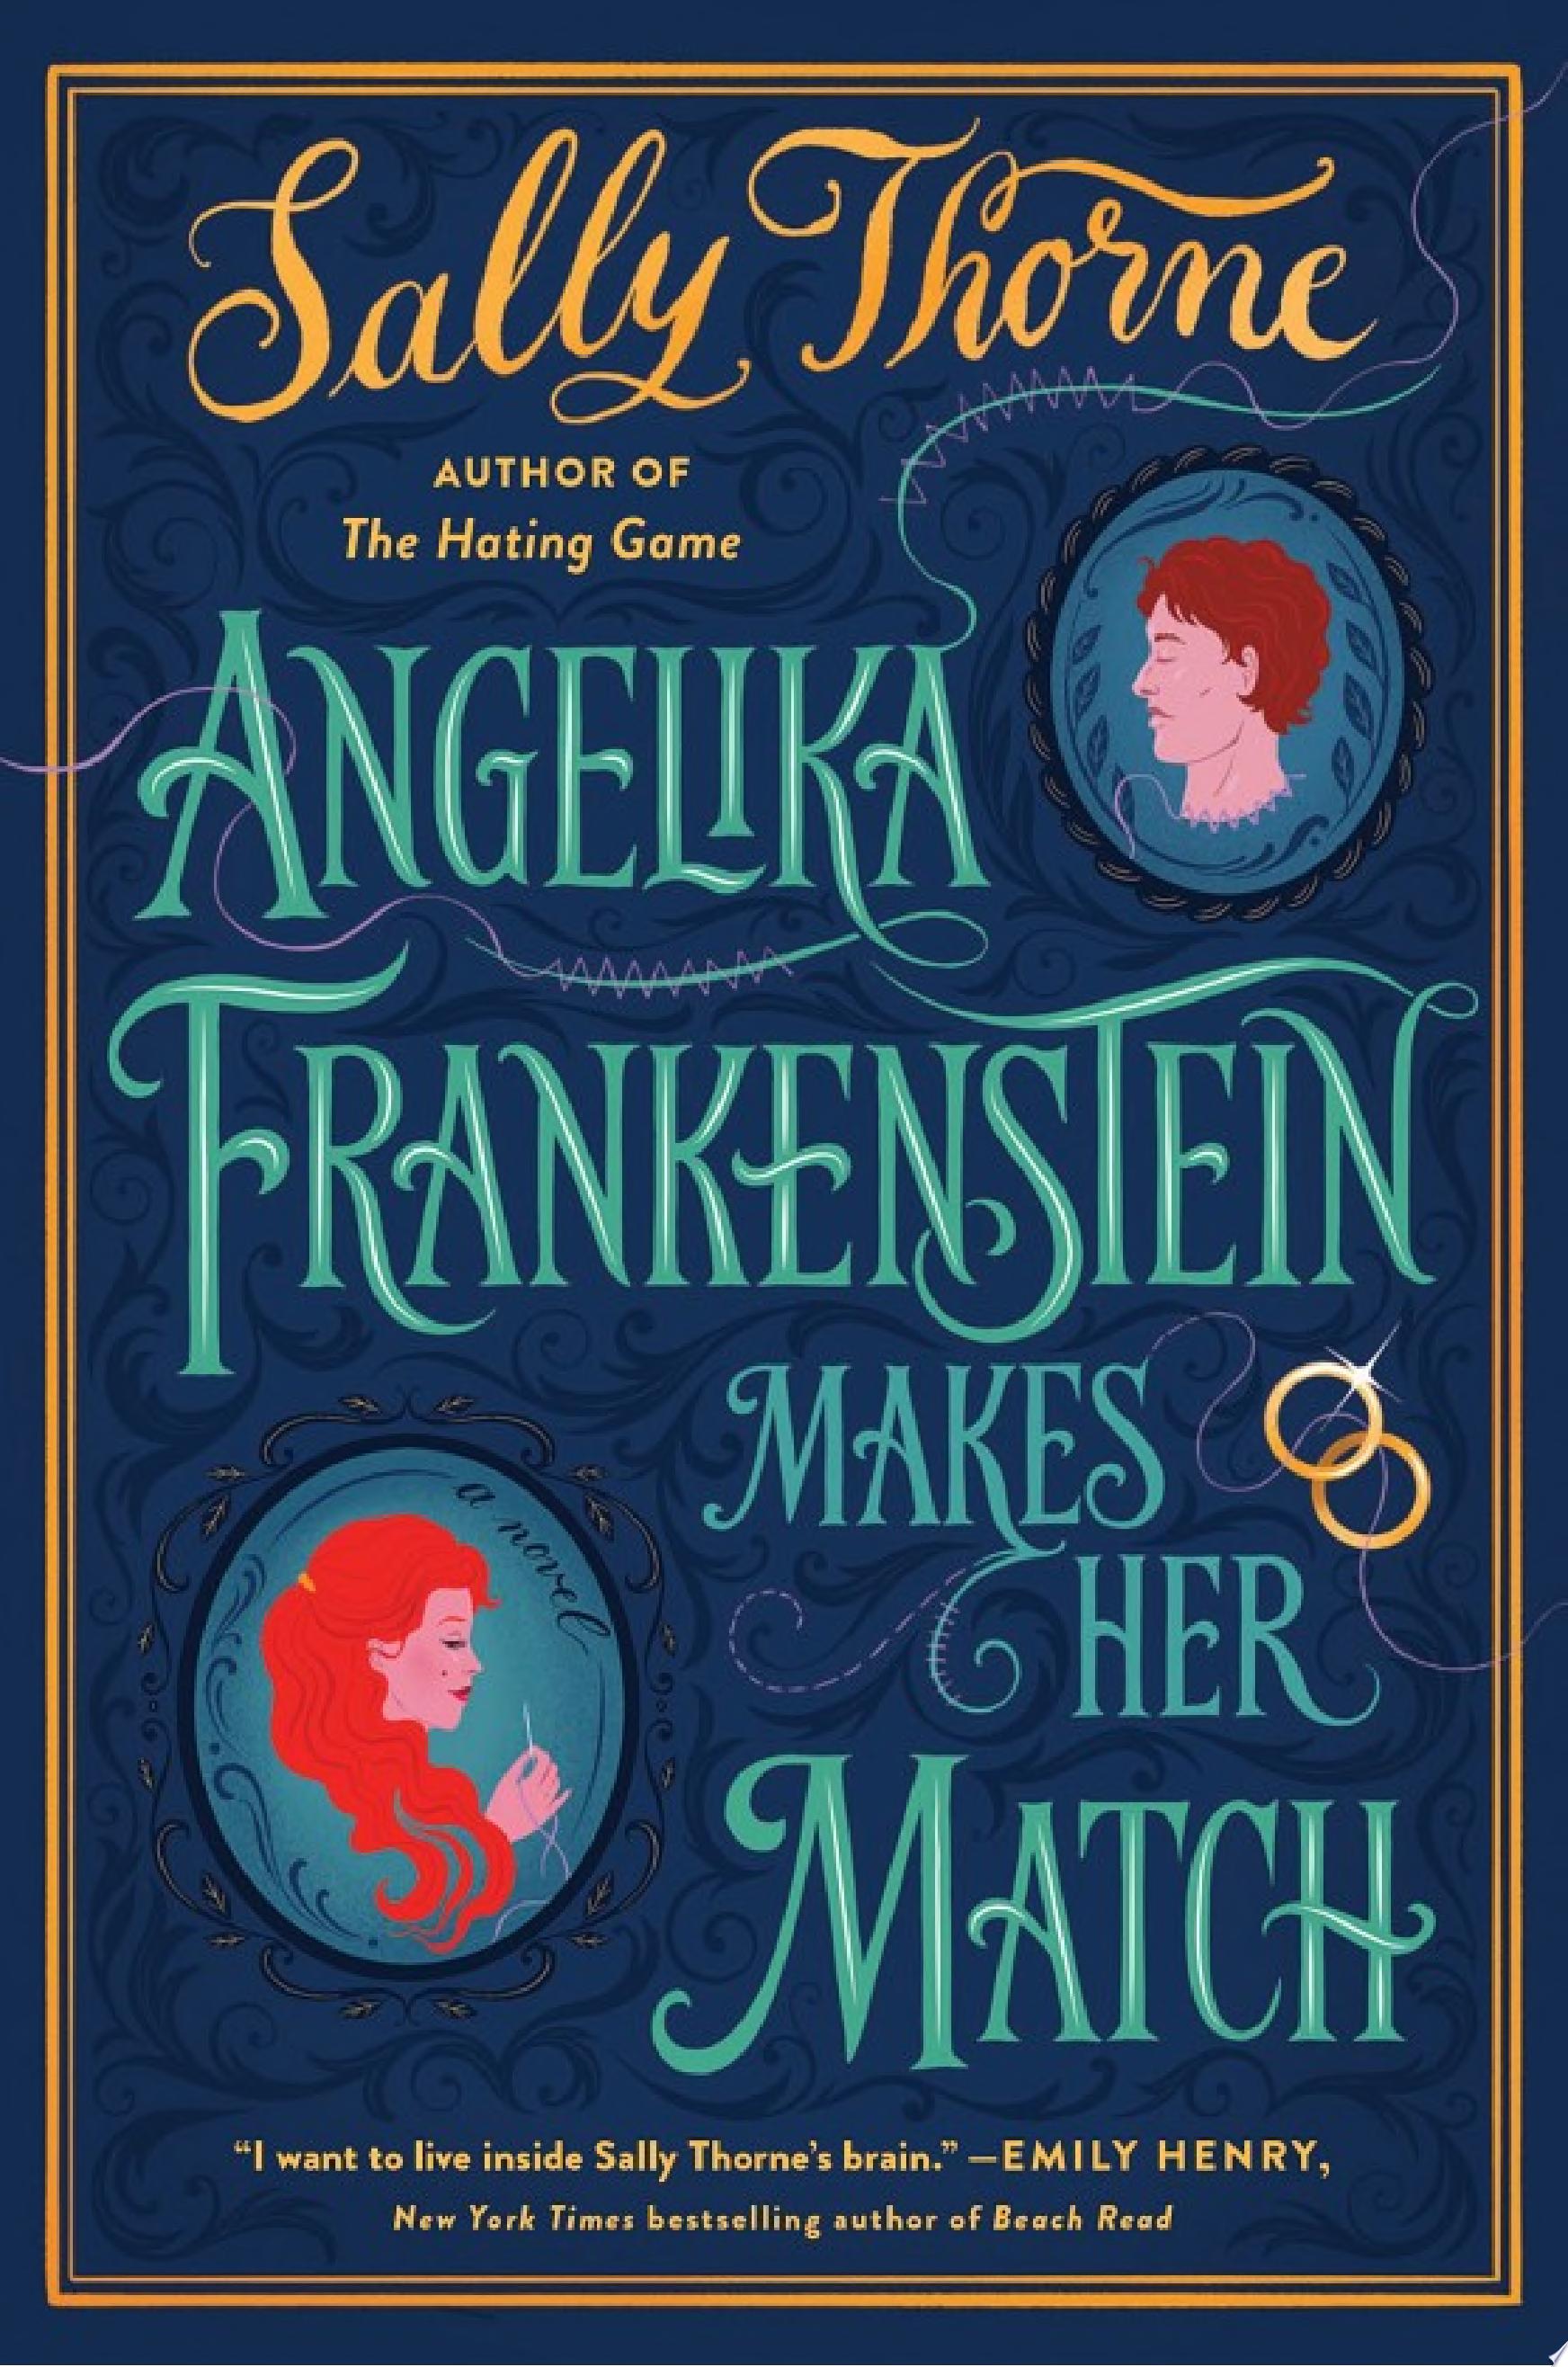 Image for "Angelika Frankenstein Makes Her Match"